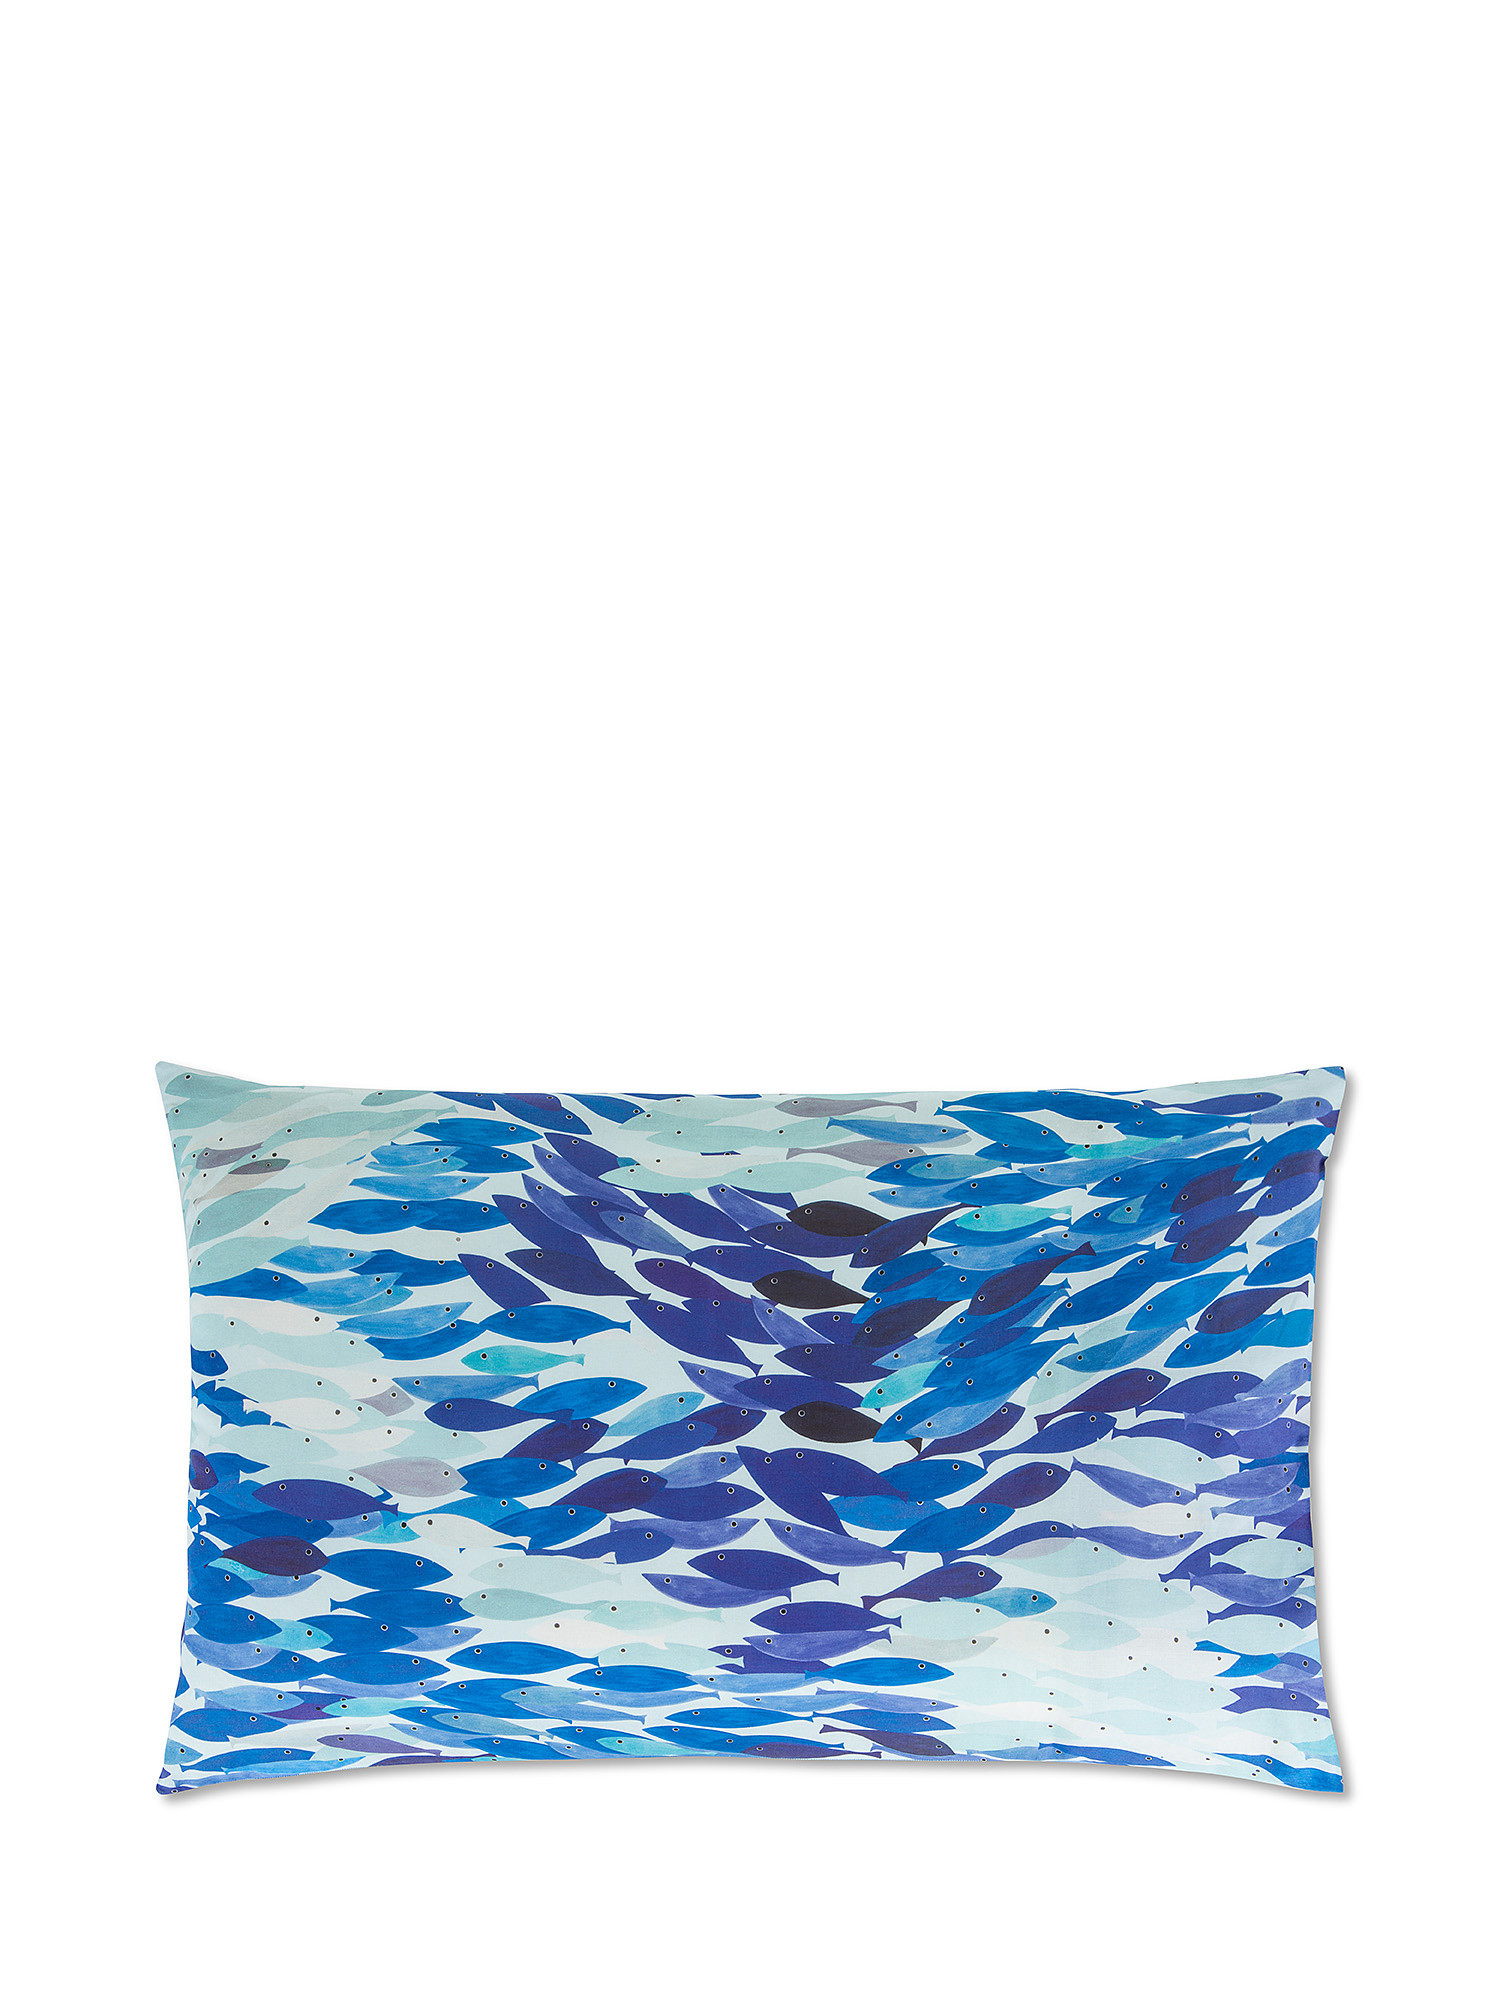 Fish pattern cotton muslin pillowcase, Blue, large image number 0